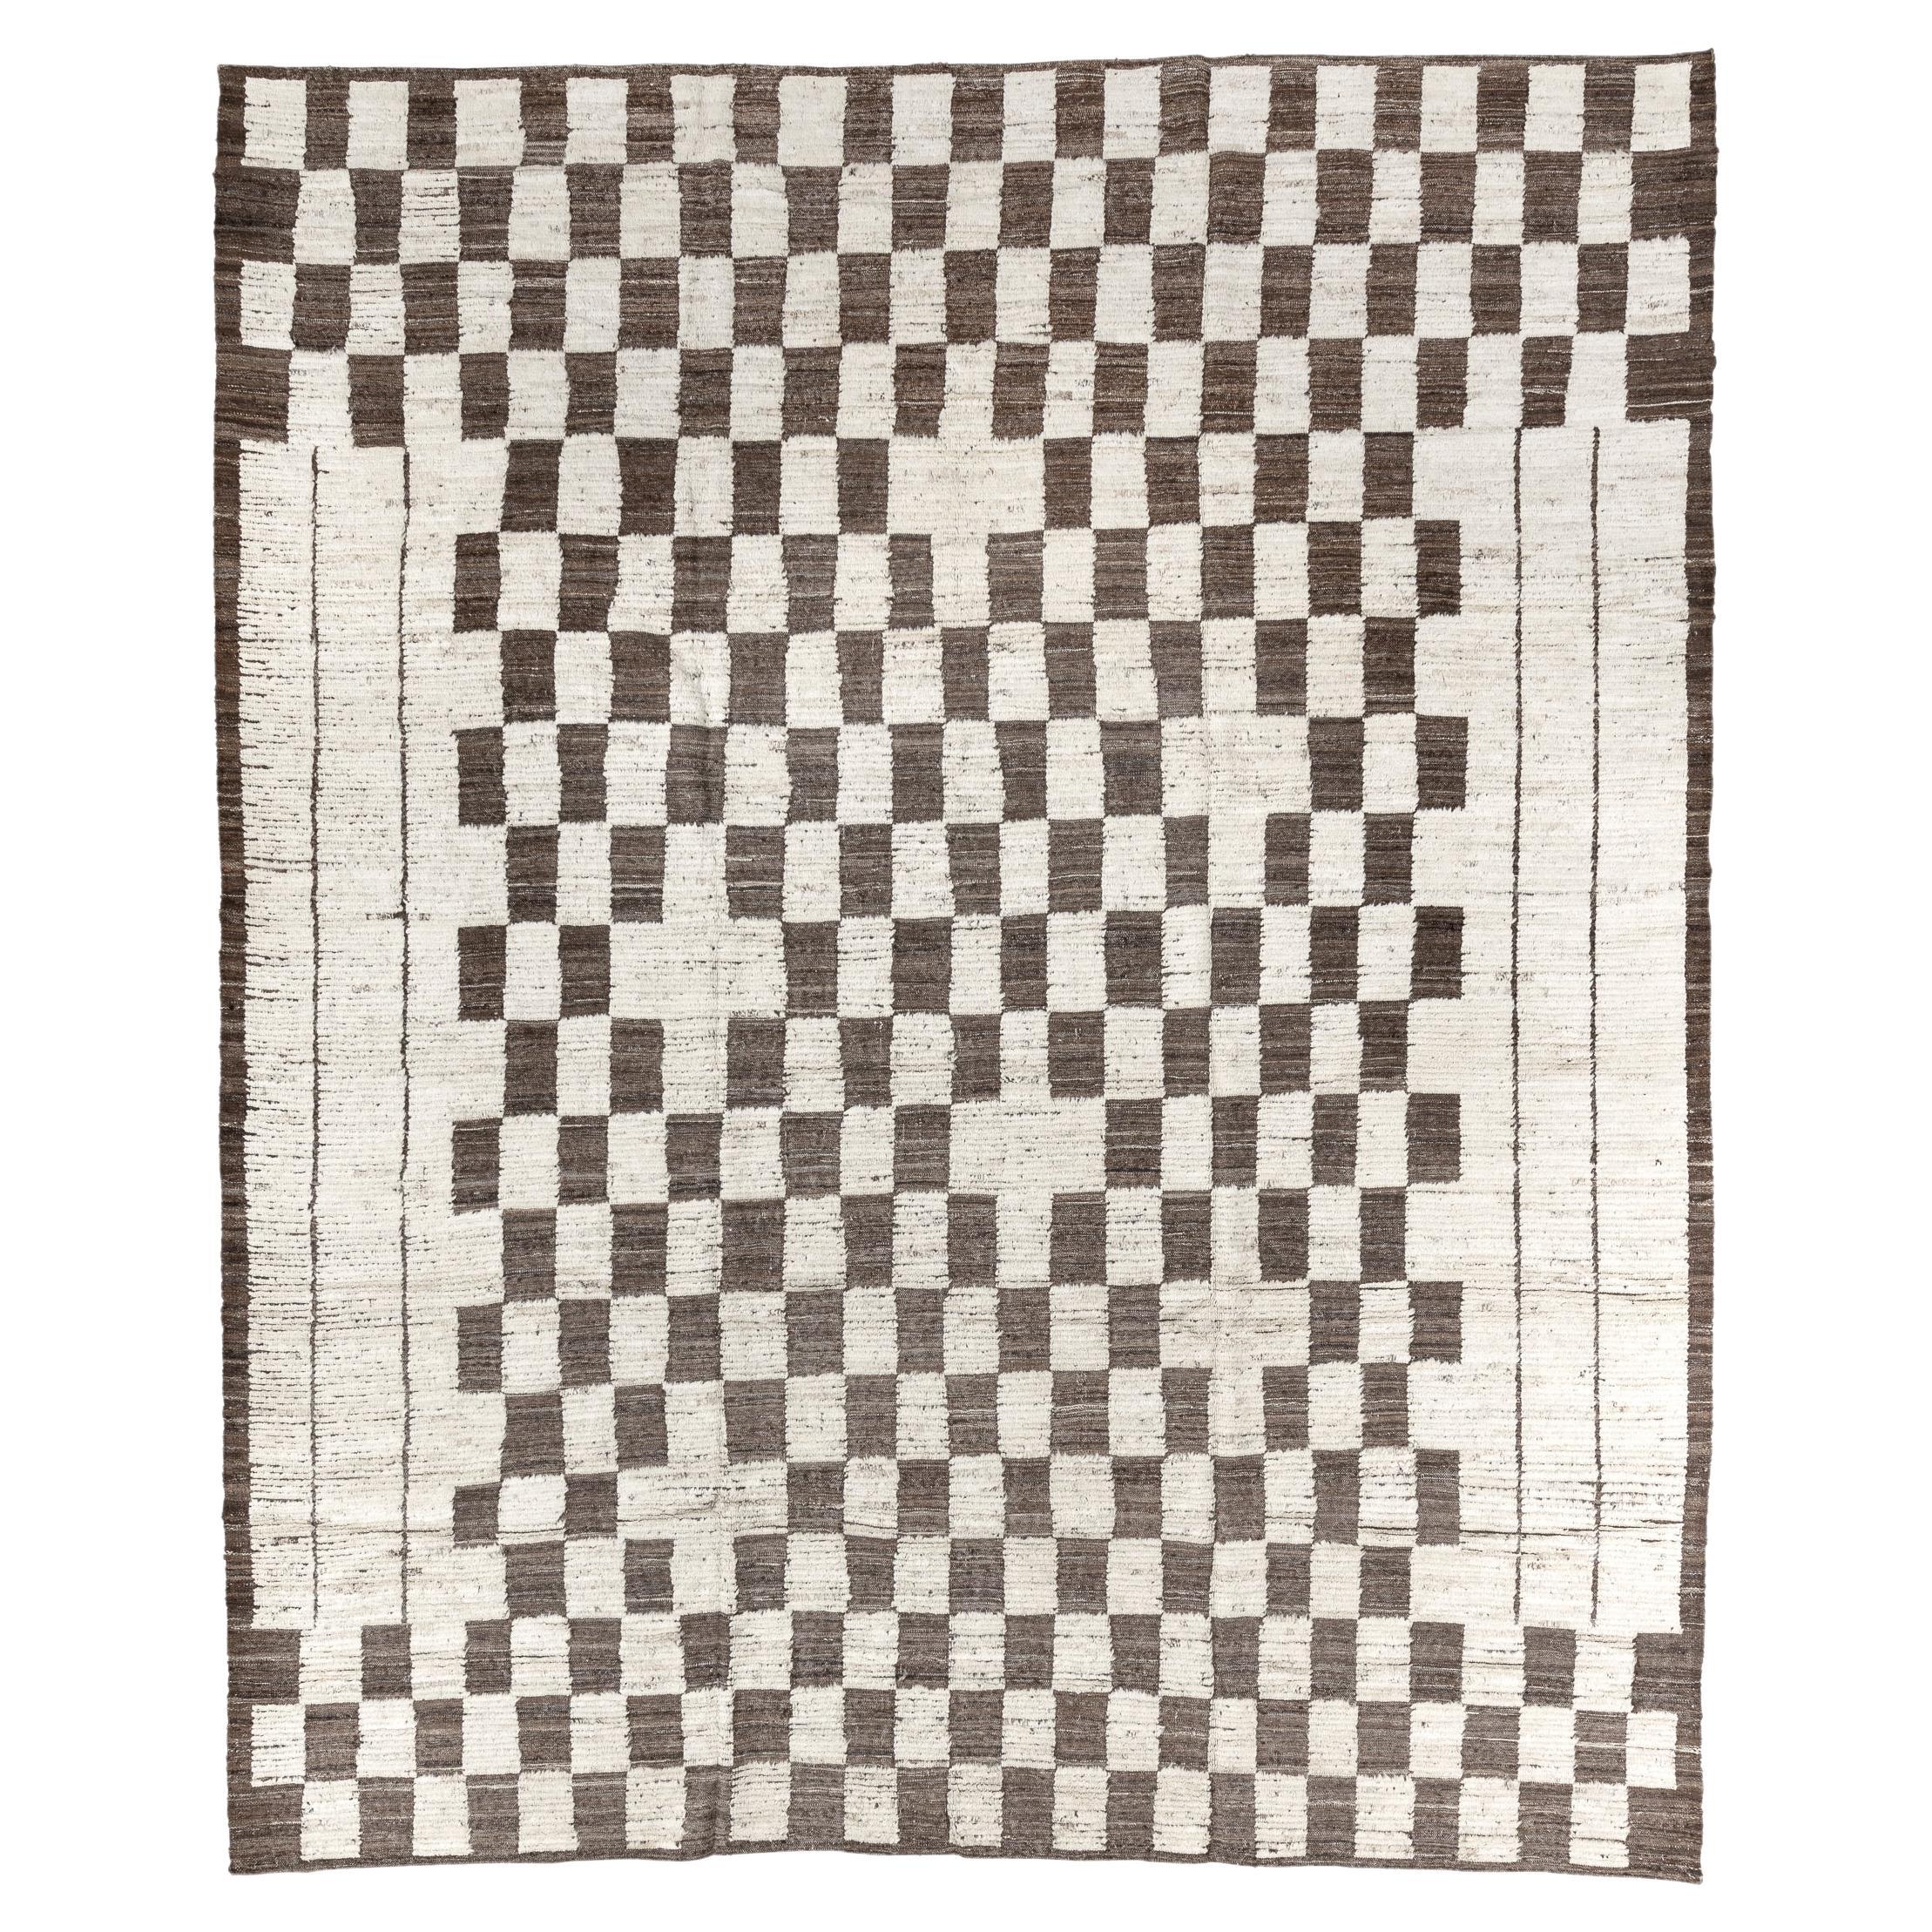 Checkers Board Tulu XL